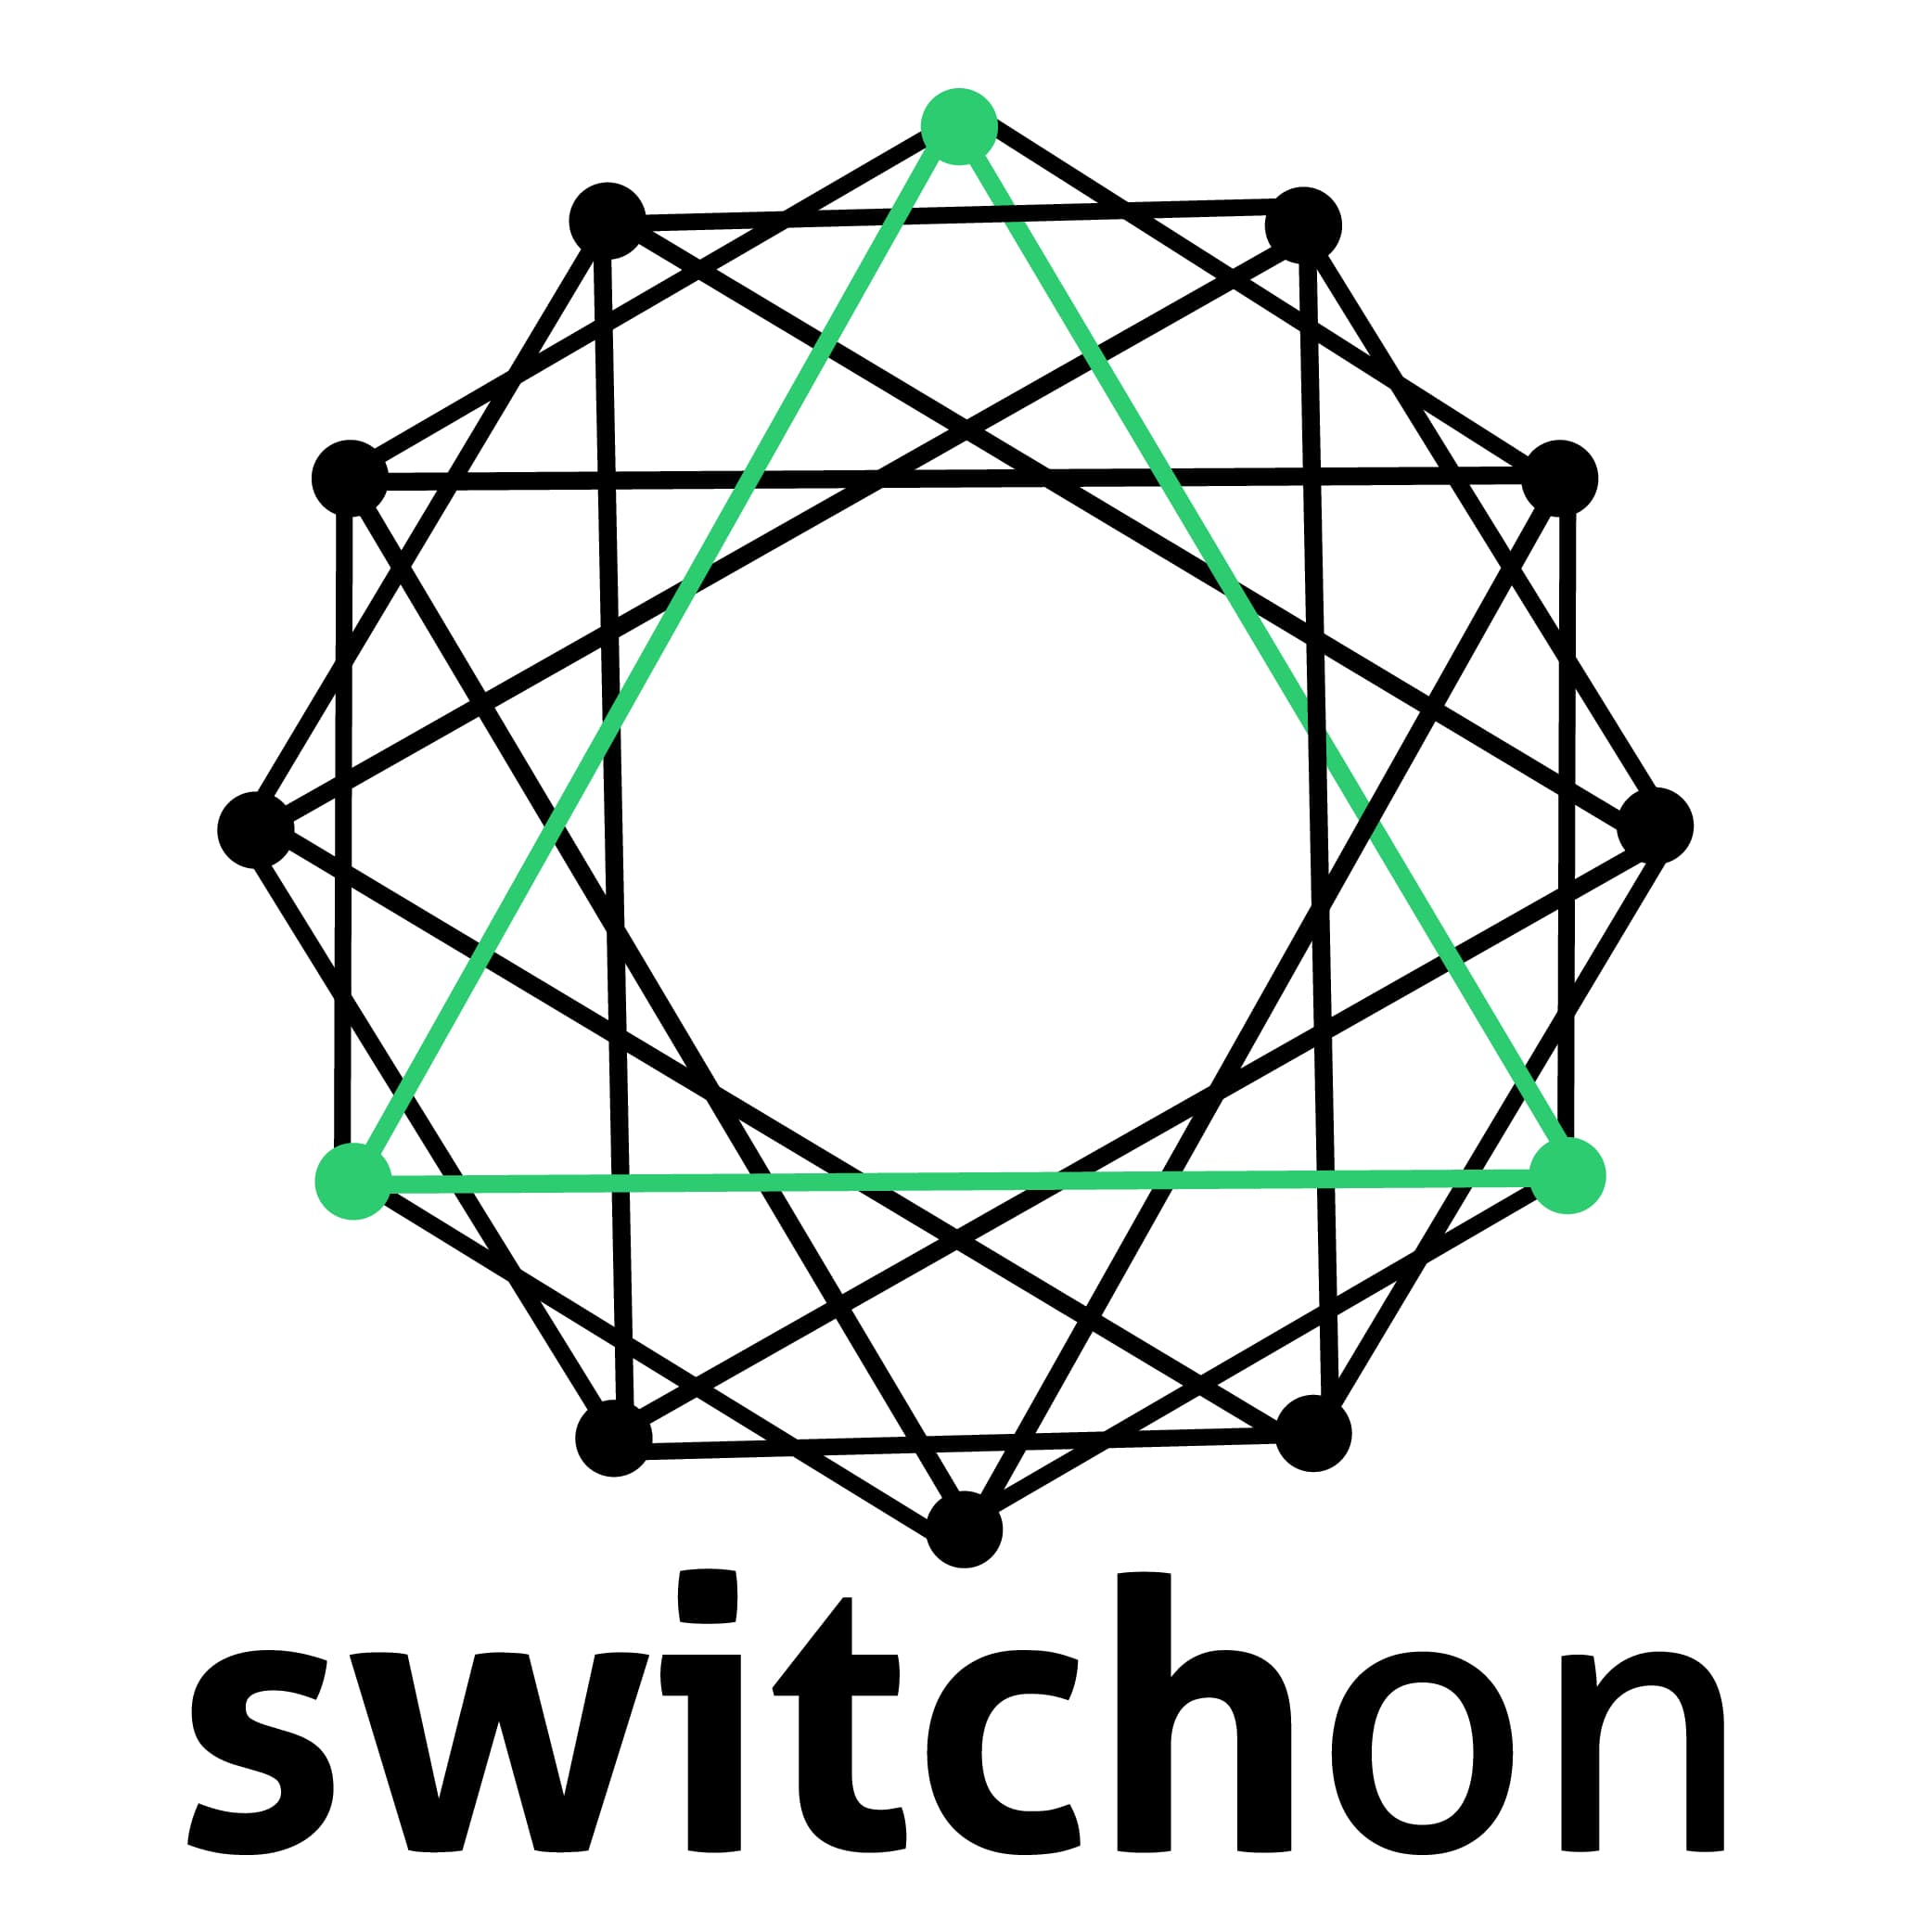 SwitchOn's logo